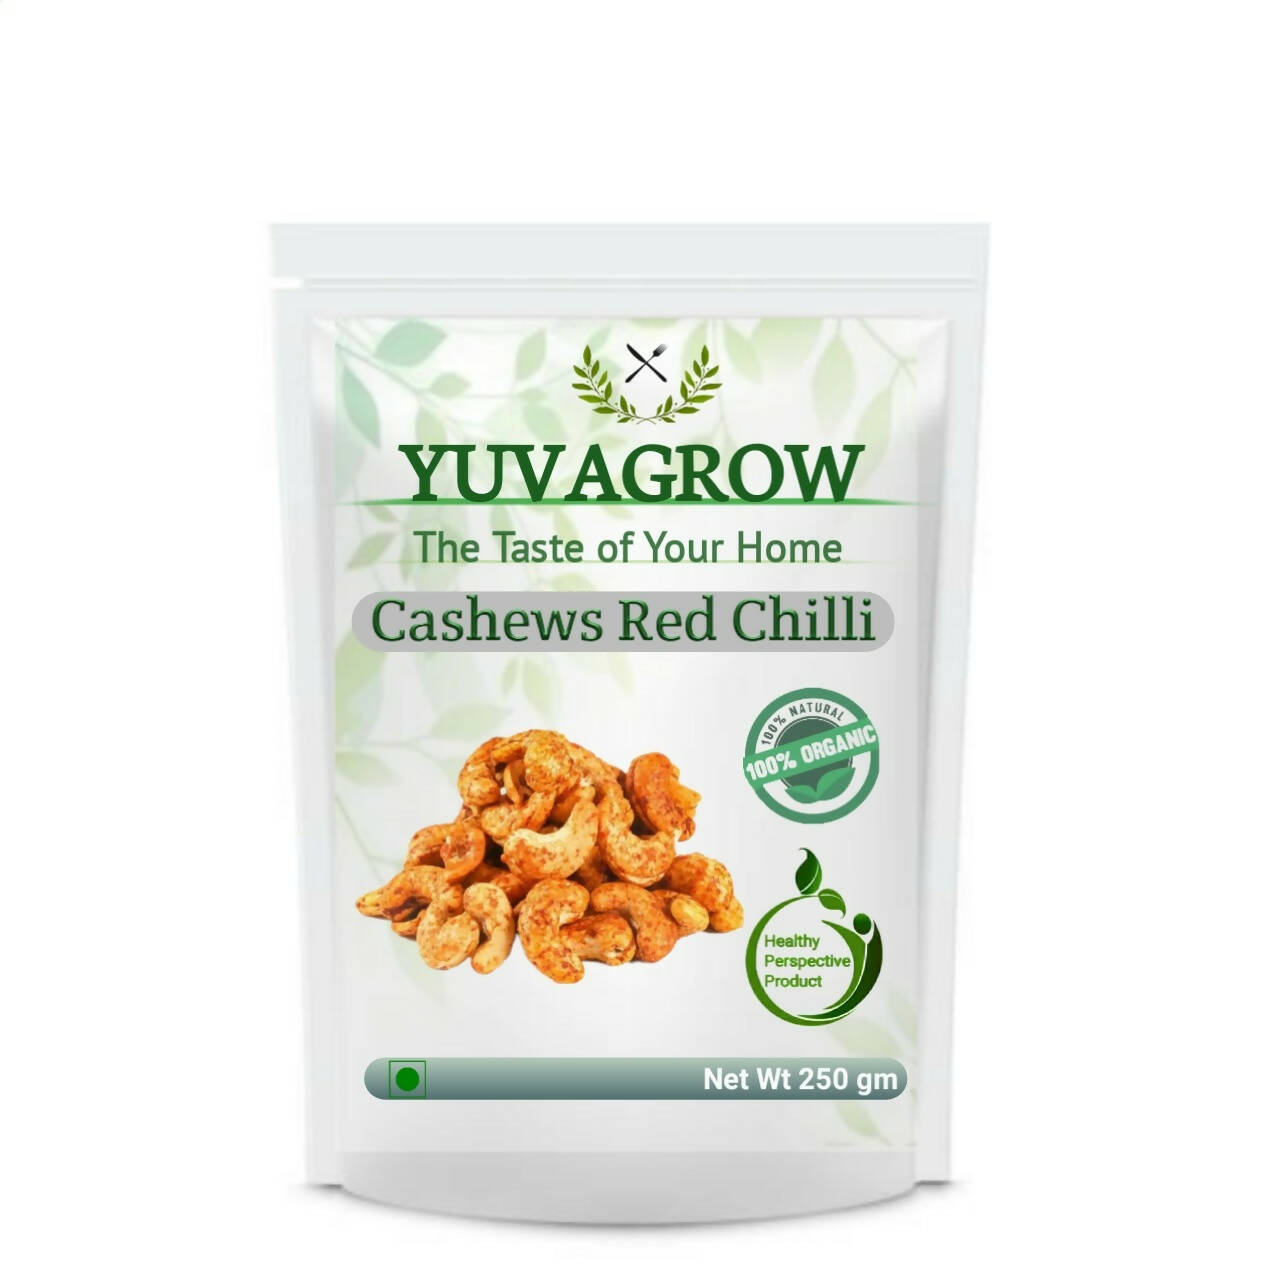 Yuvagrow Cashews Red Chilli - buy in USA, Australia, Canada